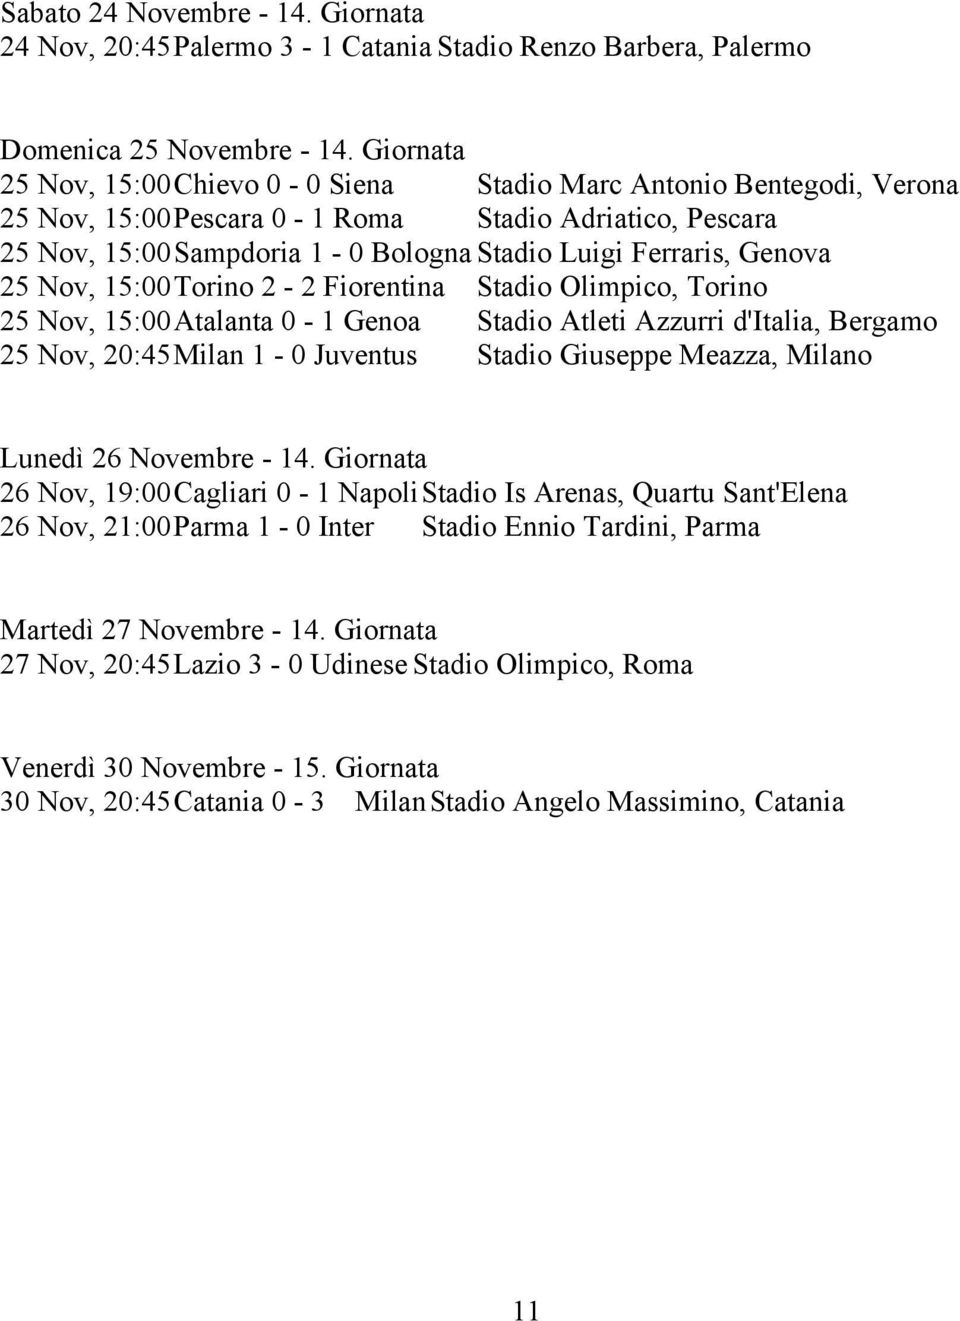 25 Nov, 15:00Torino 2-2 Fiorentina Stadio Olimpico, Torino 25 Nov, 15:00Atalanta 0-1 Genoa Stadio Atleti Azzurri d'italia, Bergamo 25 Nov, 20:45Milan 1-0 Juventus Stadio Giuseppe Meazza, Milano